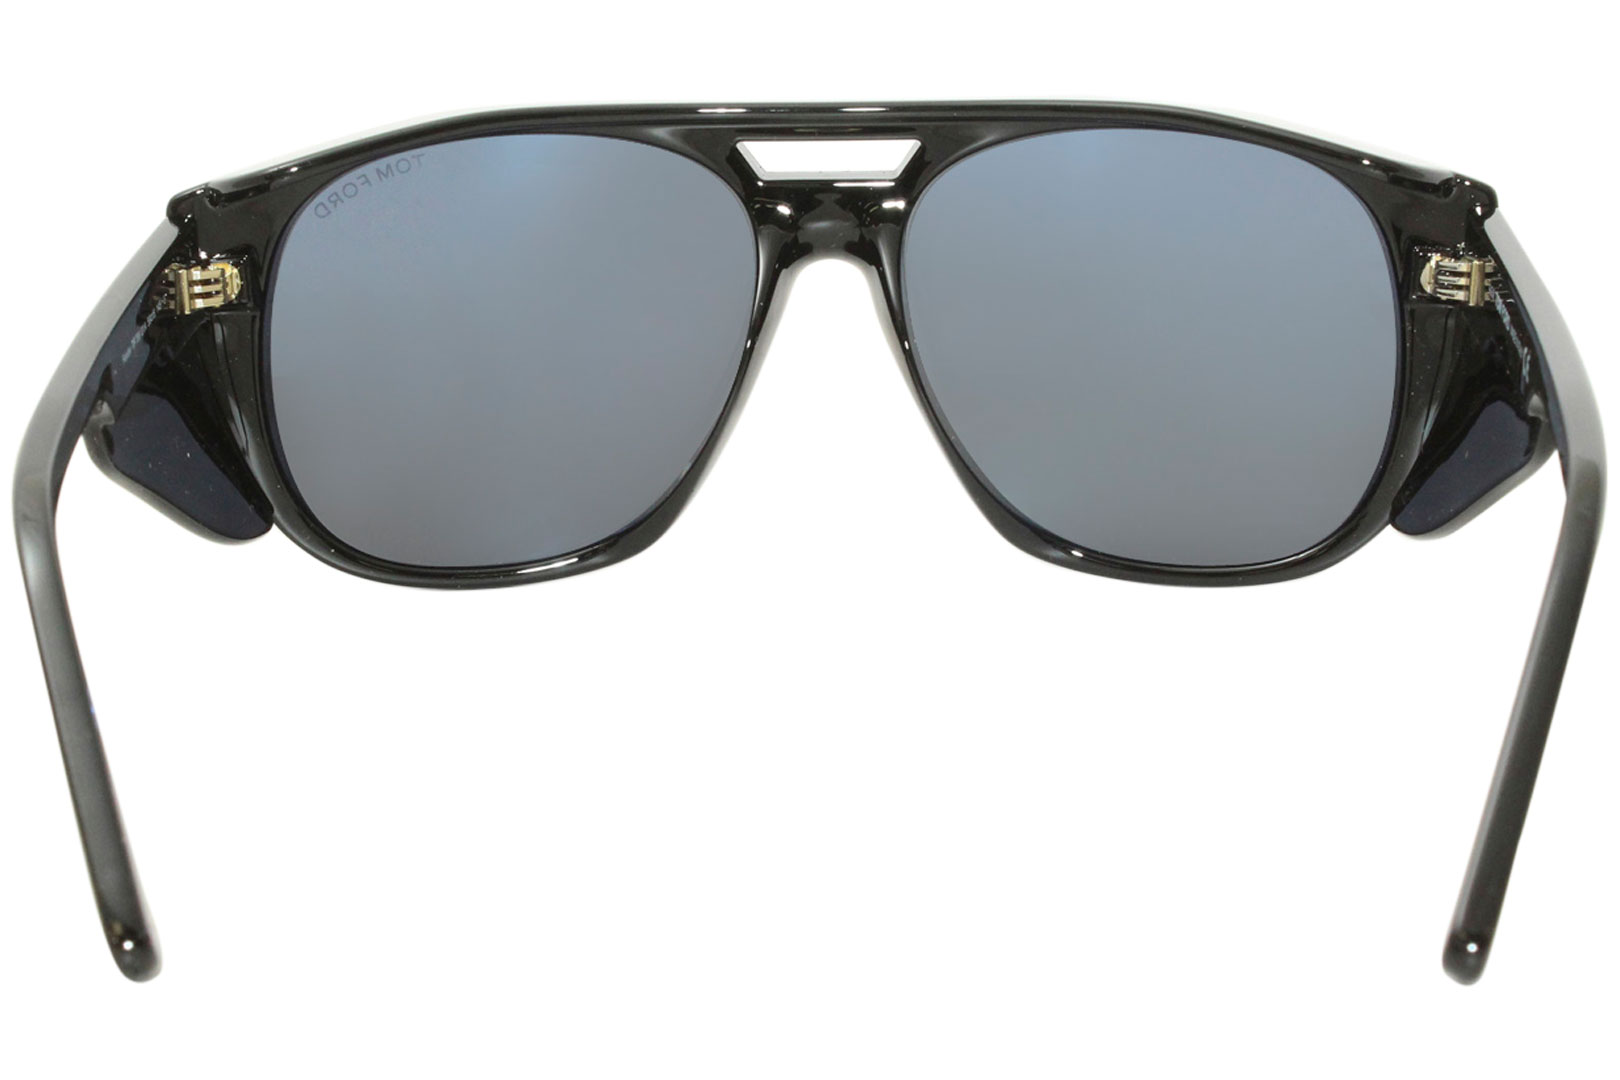 Tom Ford Fender TF799 01A Sunglasses Men's Shiny Black/Smoke Lenses Pilot  59mm 